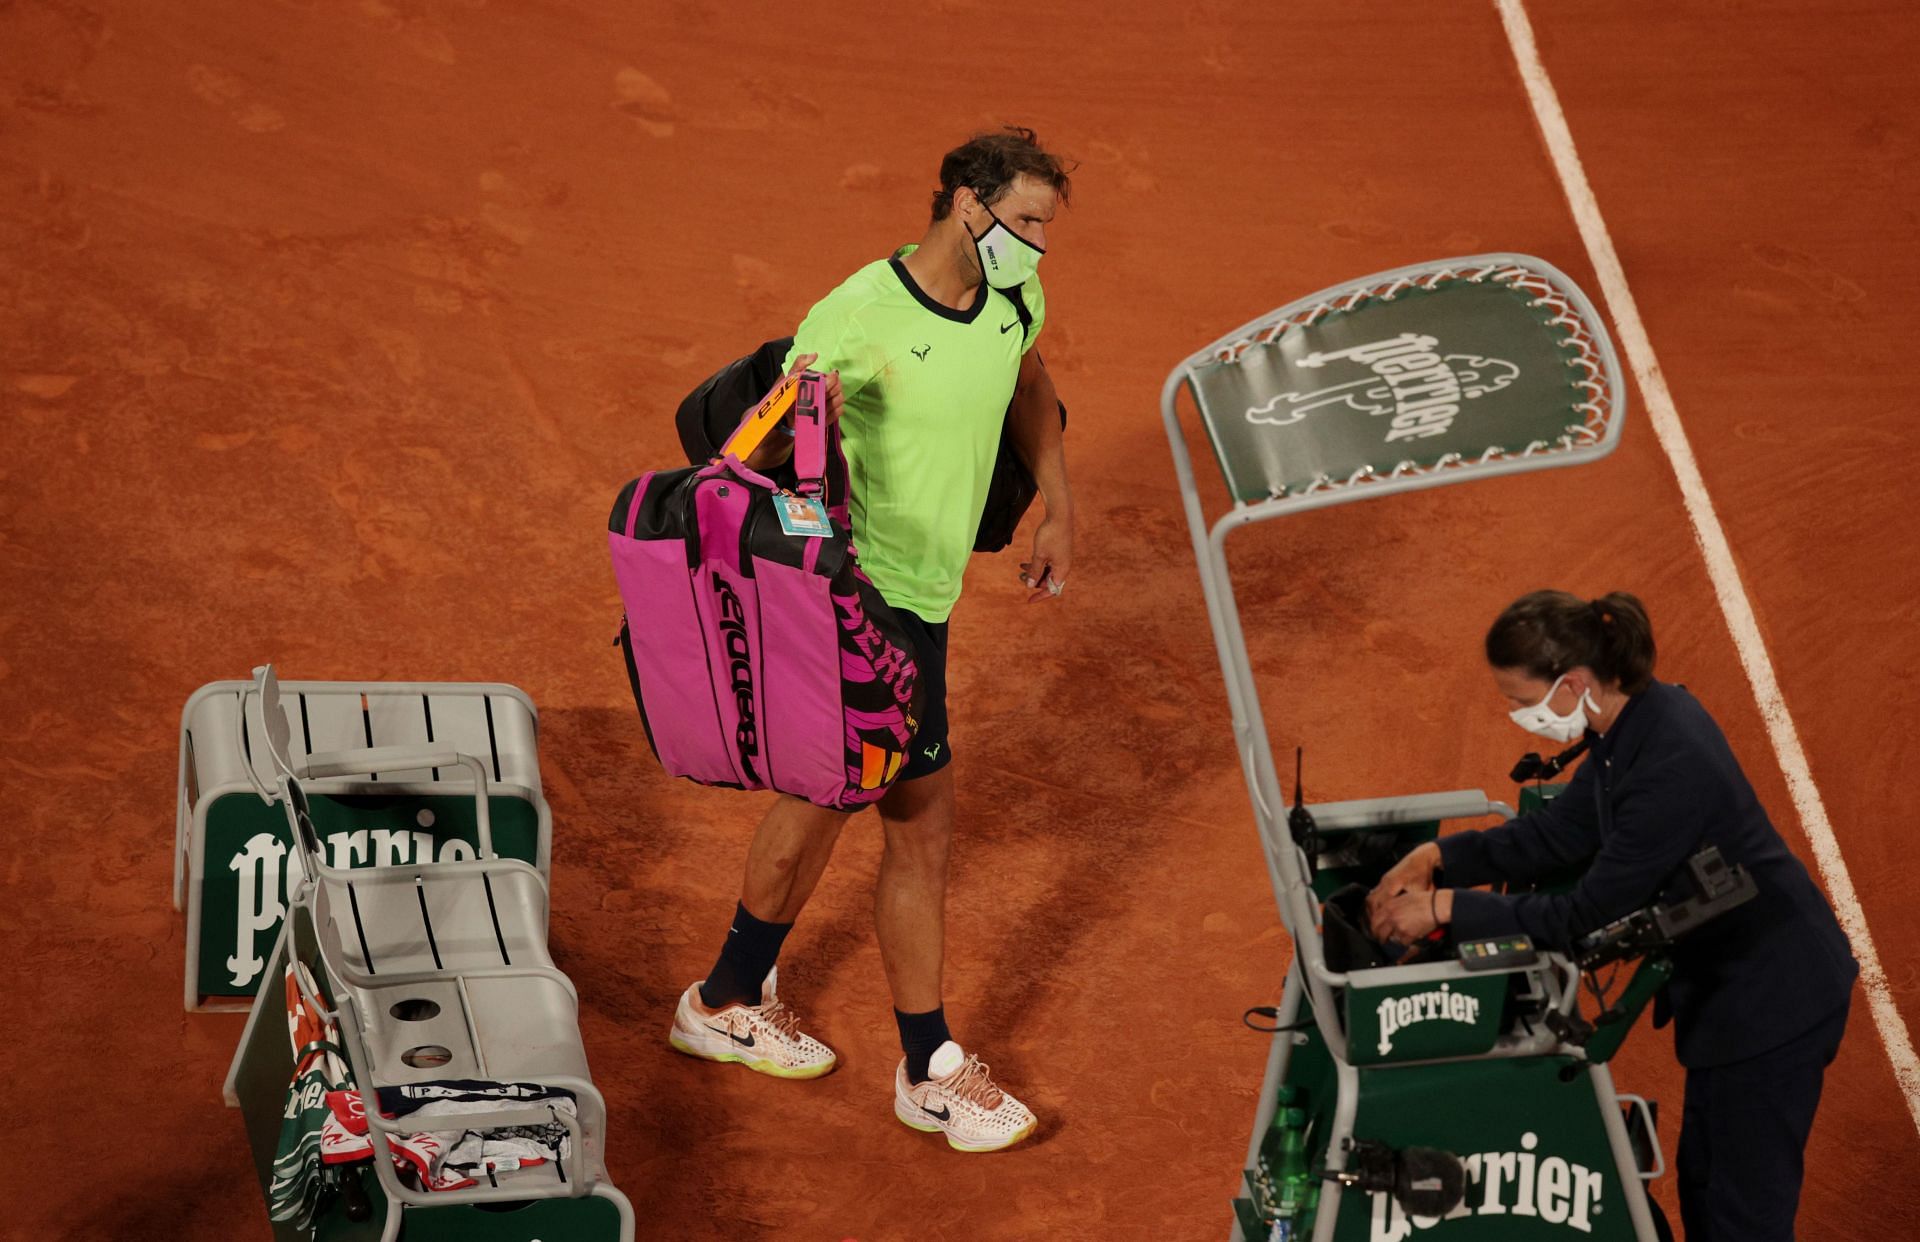 Rafael Nadal after his loss in the 2021 Roland Garros semis against Djokovic.